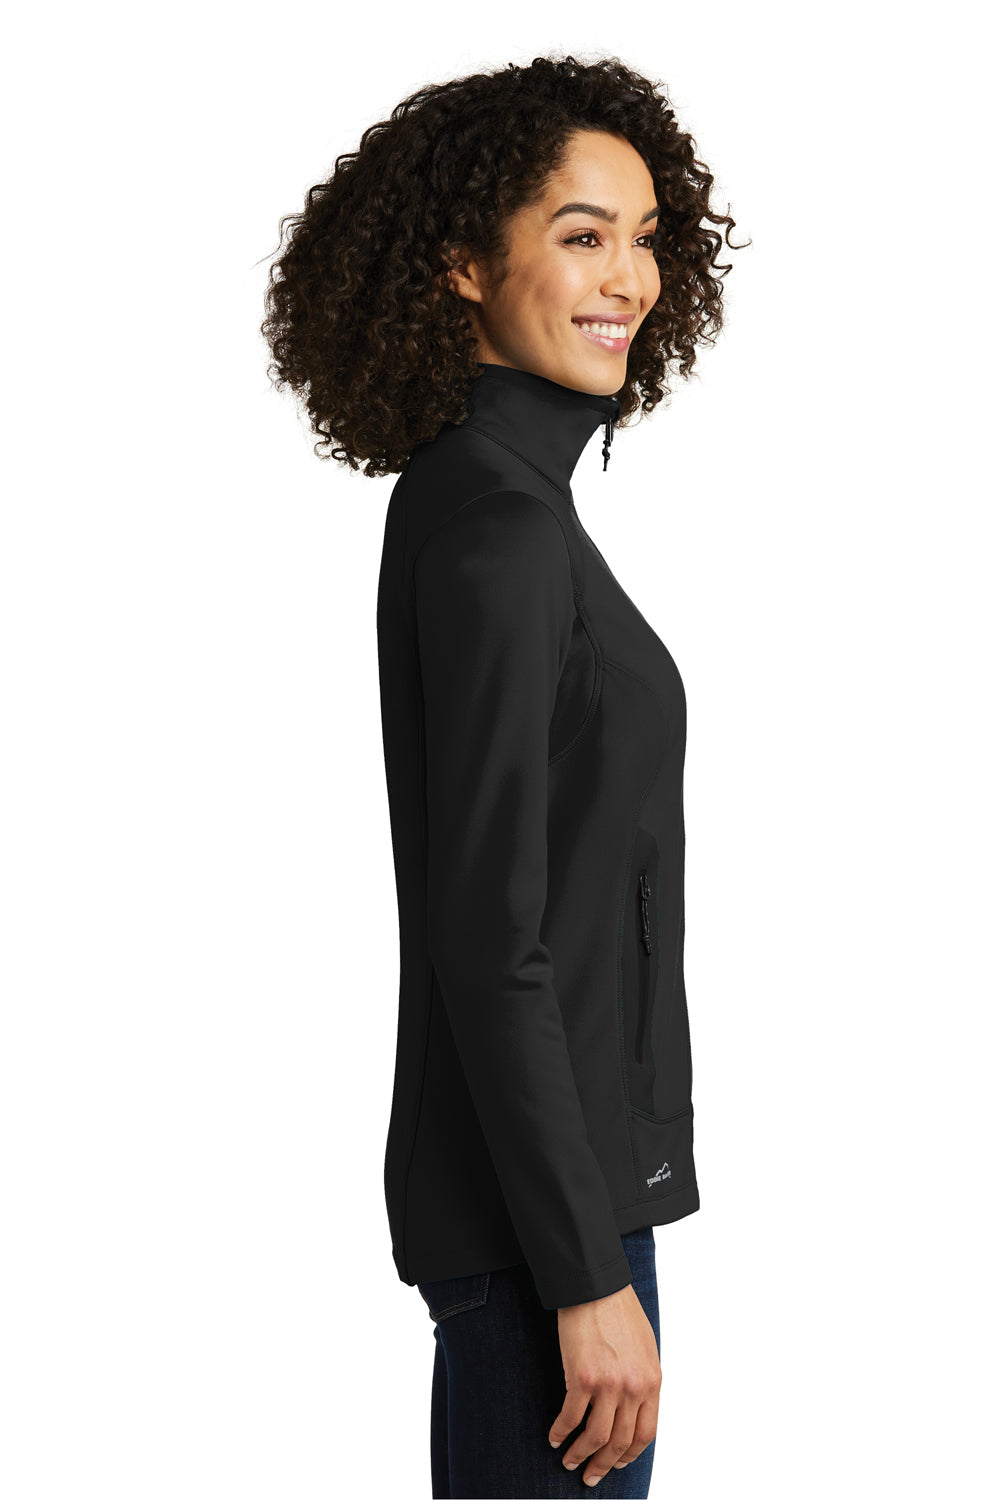 Eddie Bauer EB241 Womens Highpoint Pill Resistant Fleece Full Zip Jacket Black Model Side